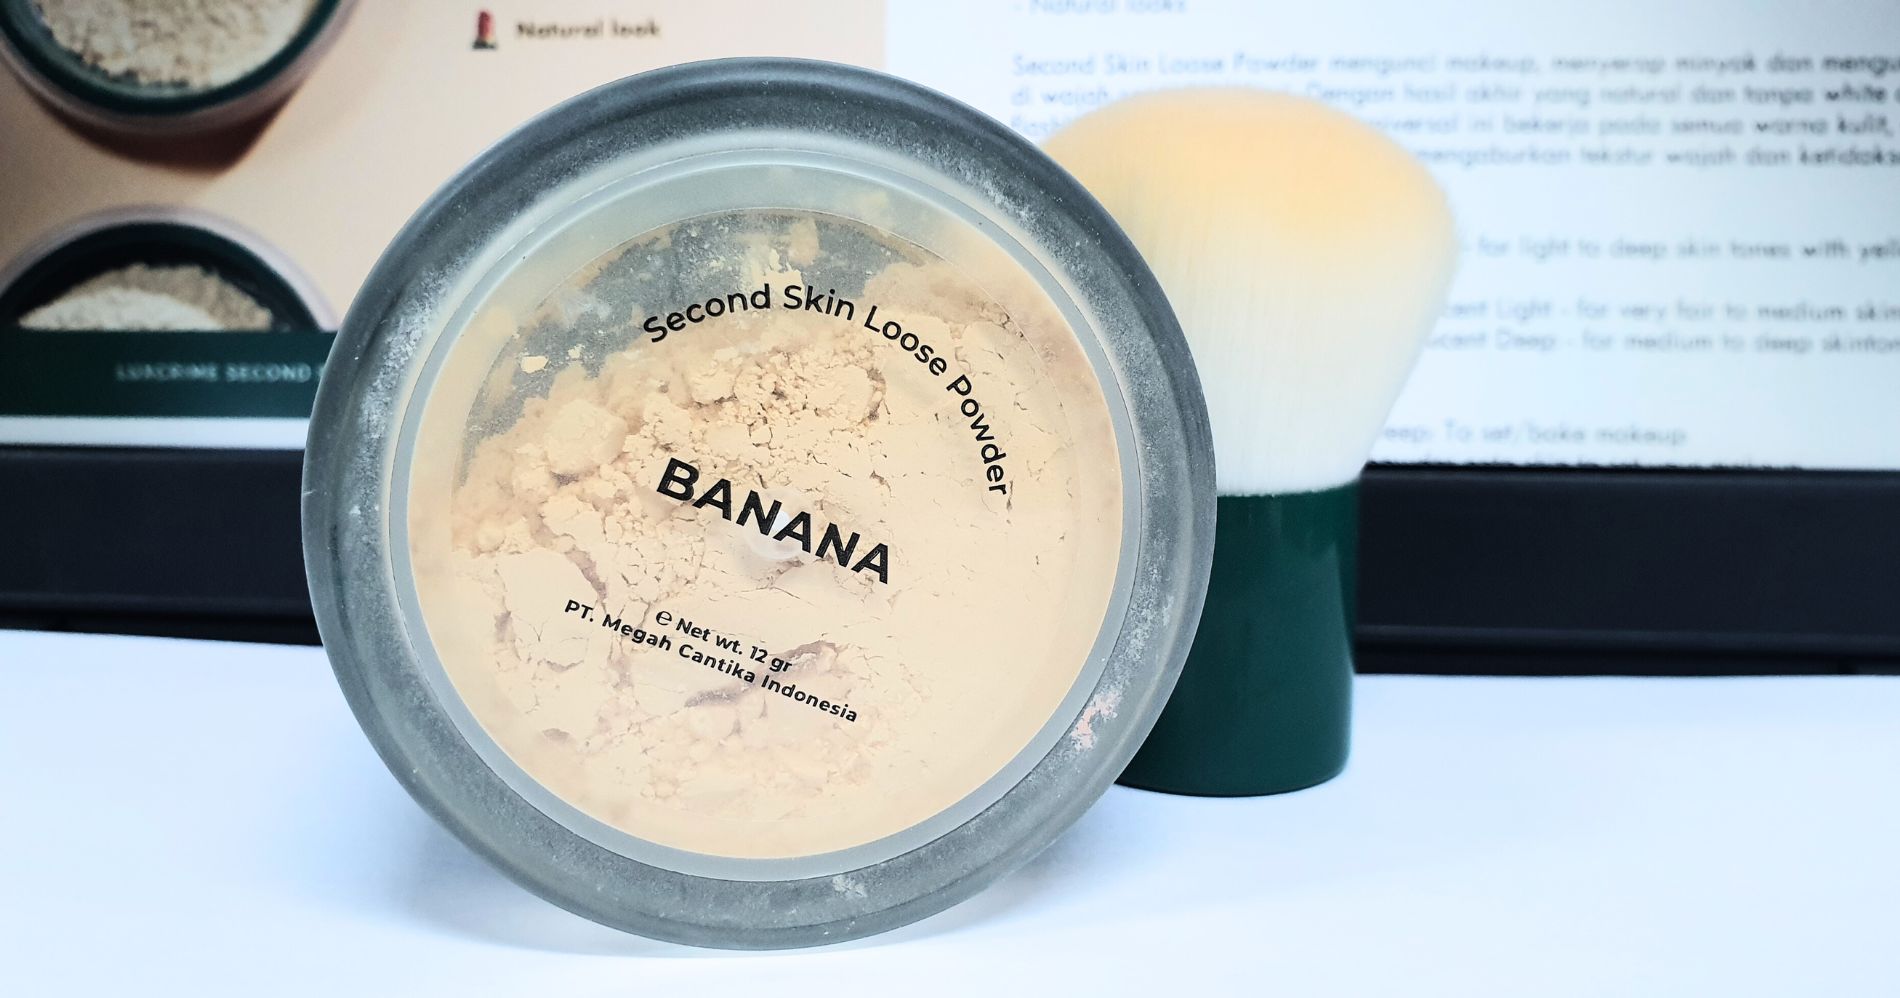 Shade Banana Luxcrime Second Skin Loose Powder - Image: Rachma Amalia